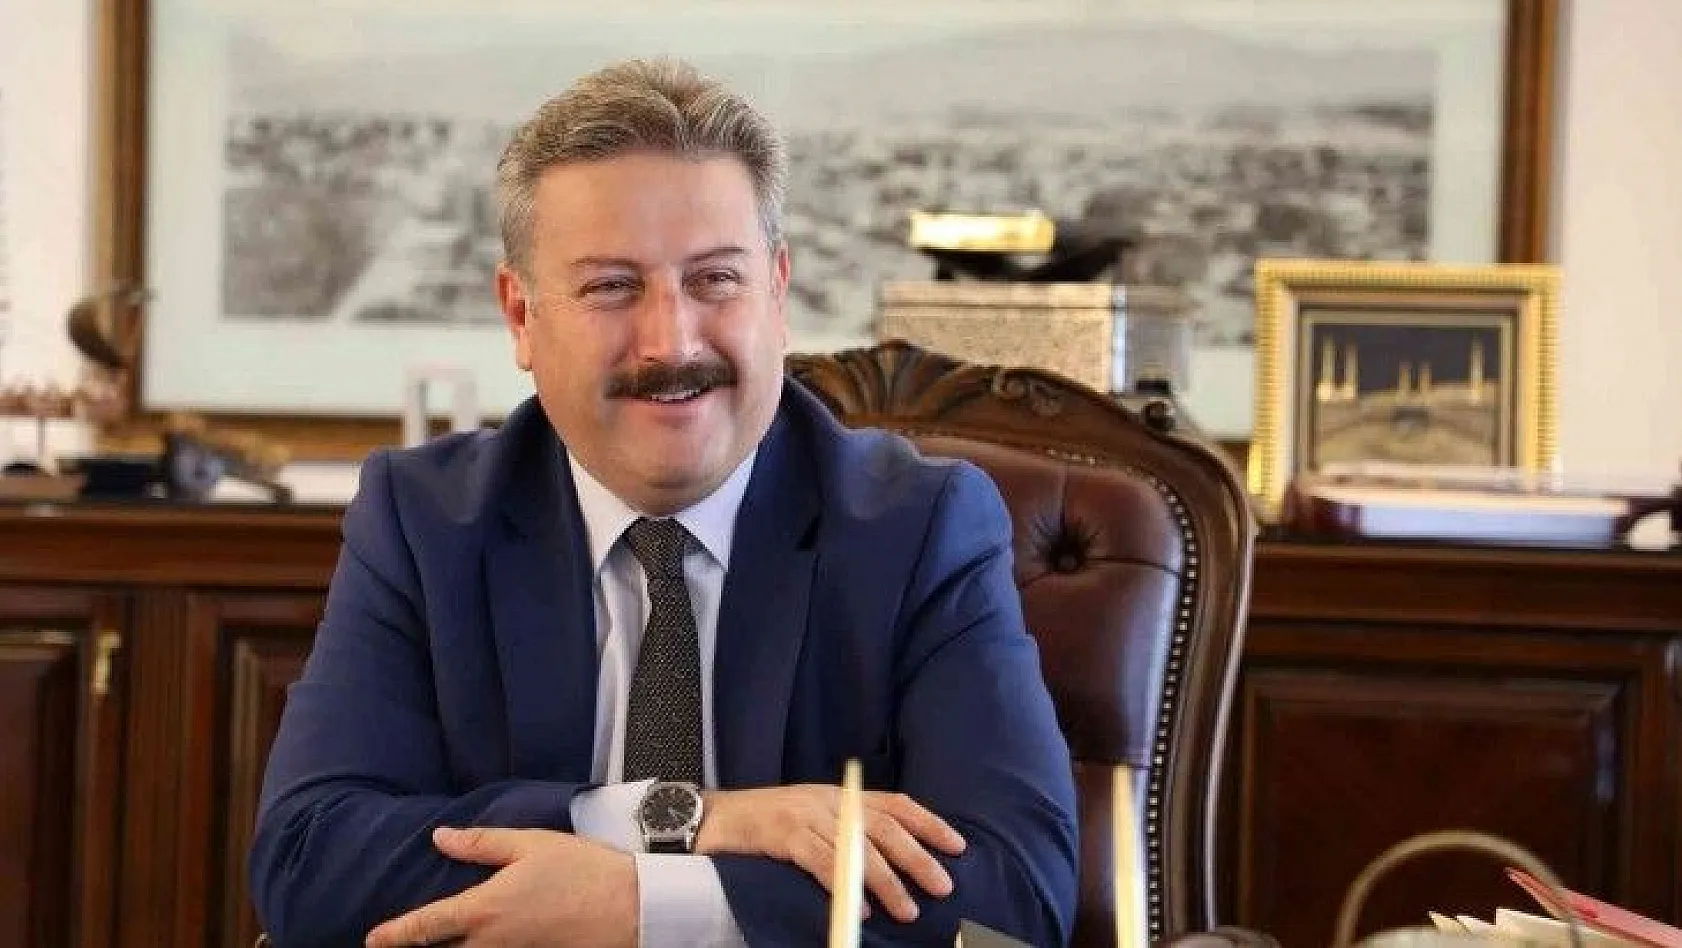 Başkan Palancıoğlu, Mevlid Kandilini kutladı